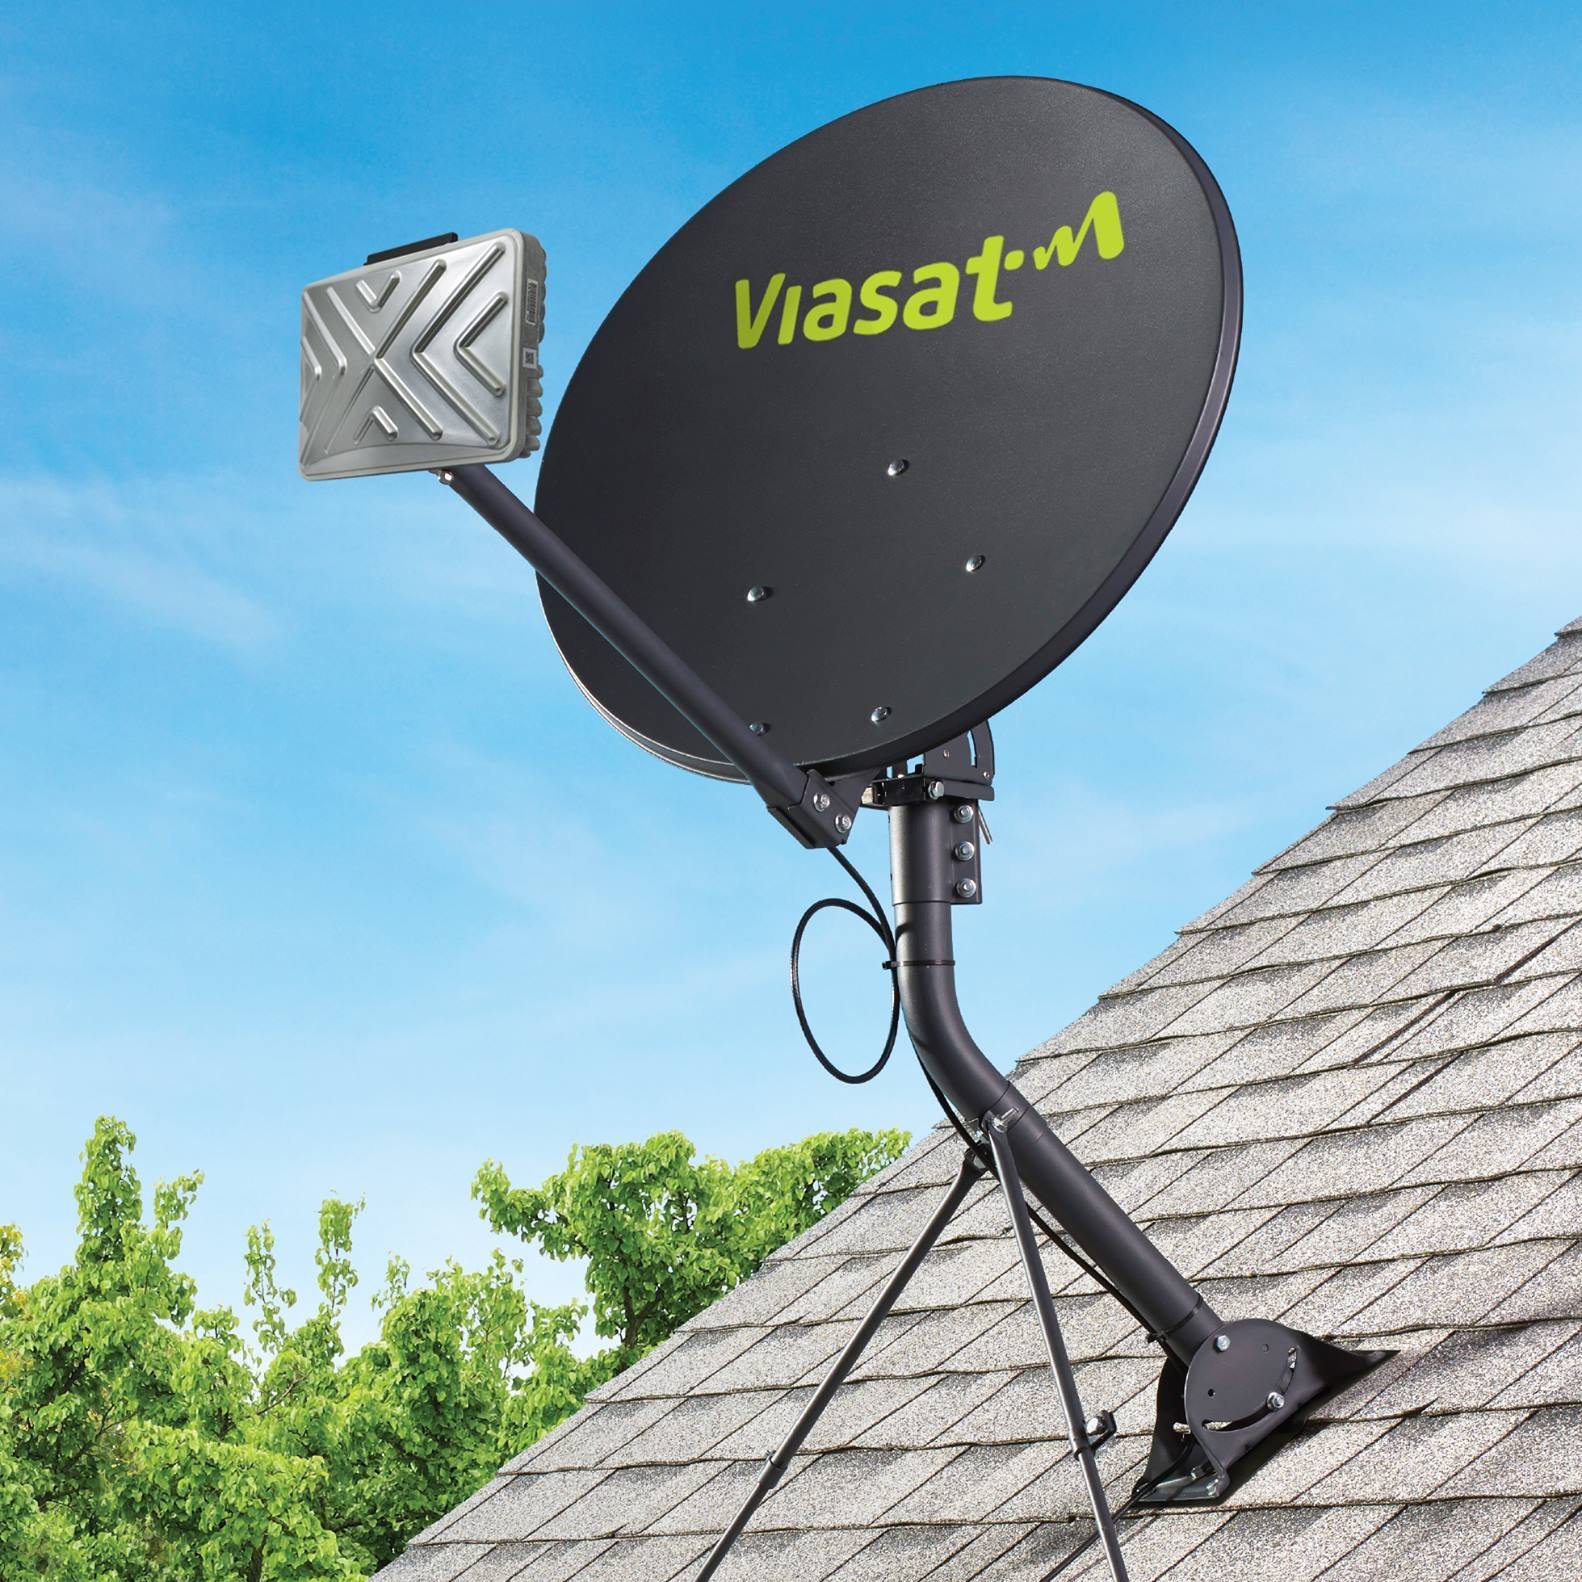 Тарелка для интернета купить. Спутниковая тарелка Viasat. Спутниковая антенна для интернета. Спутниковая тарелка для интернета в частный дом. Антенна для интернета тарелка.